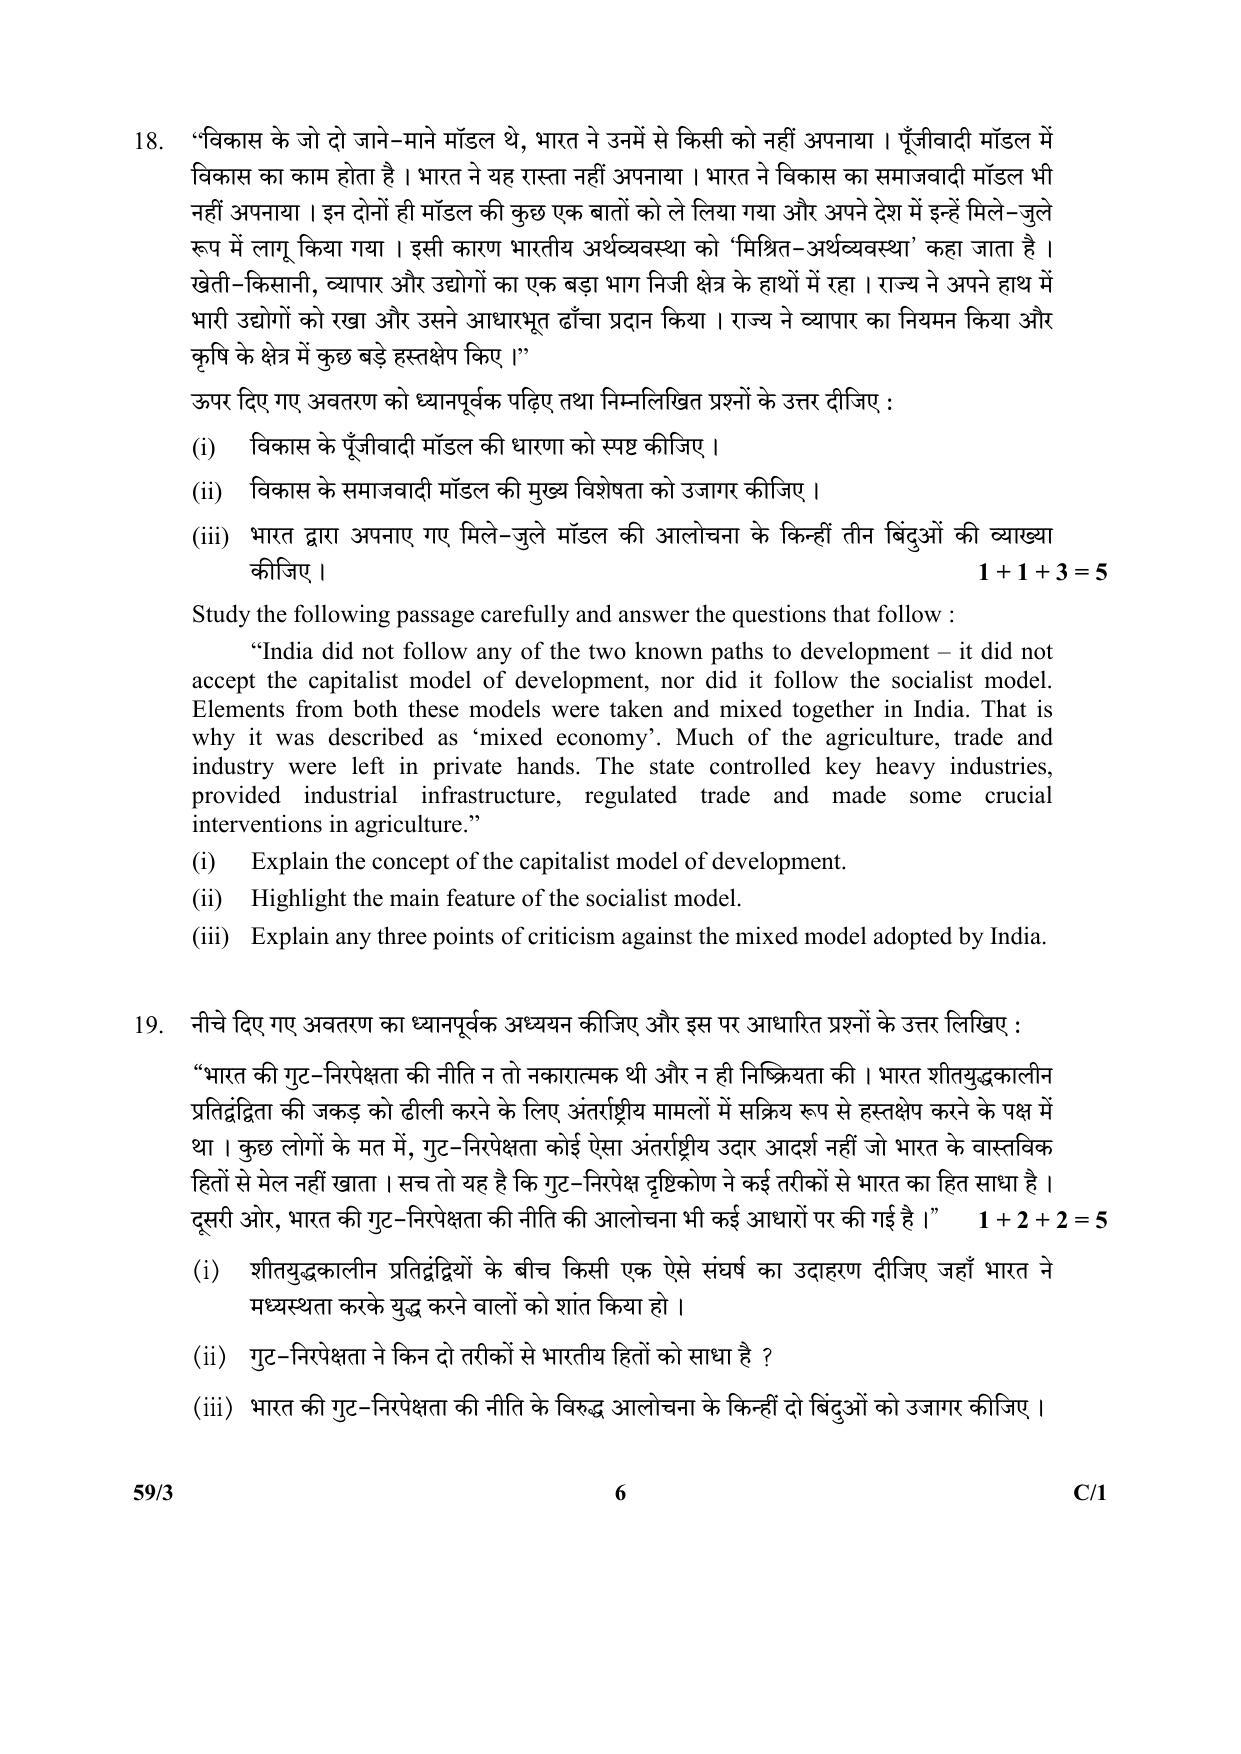 CBSE Class 12 221-3 Political Science_Punjabi 2018 Compartment Question Paper - Page 14